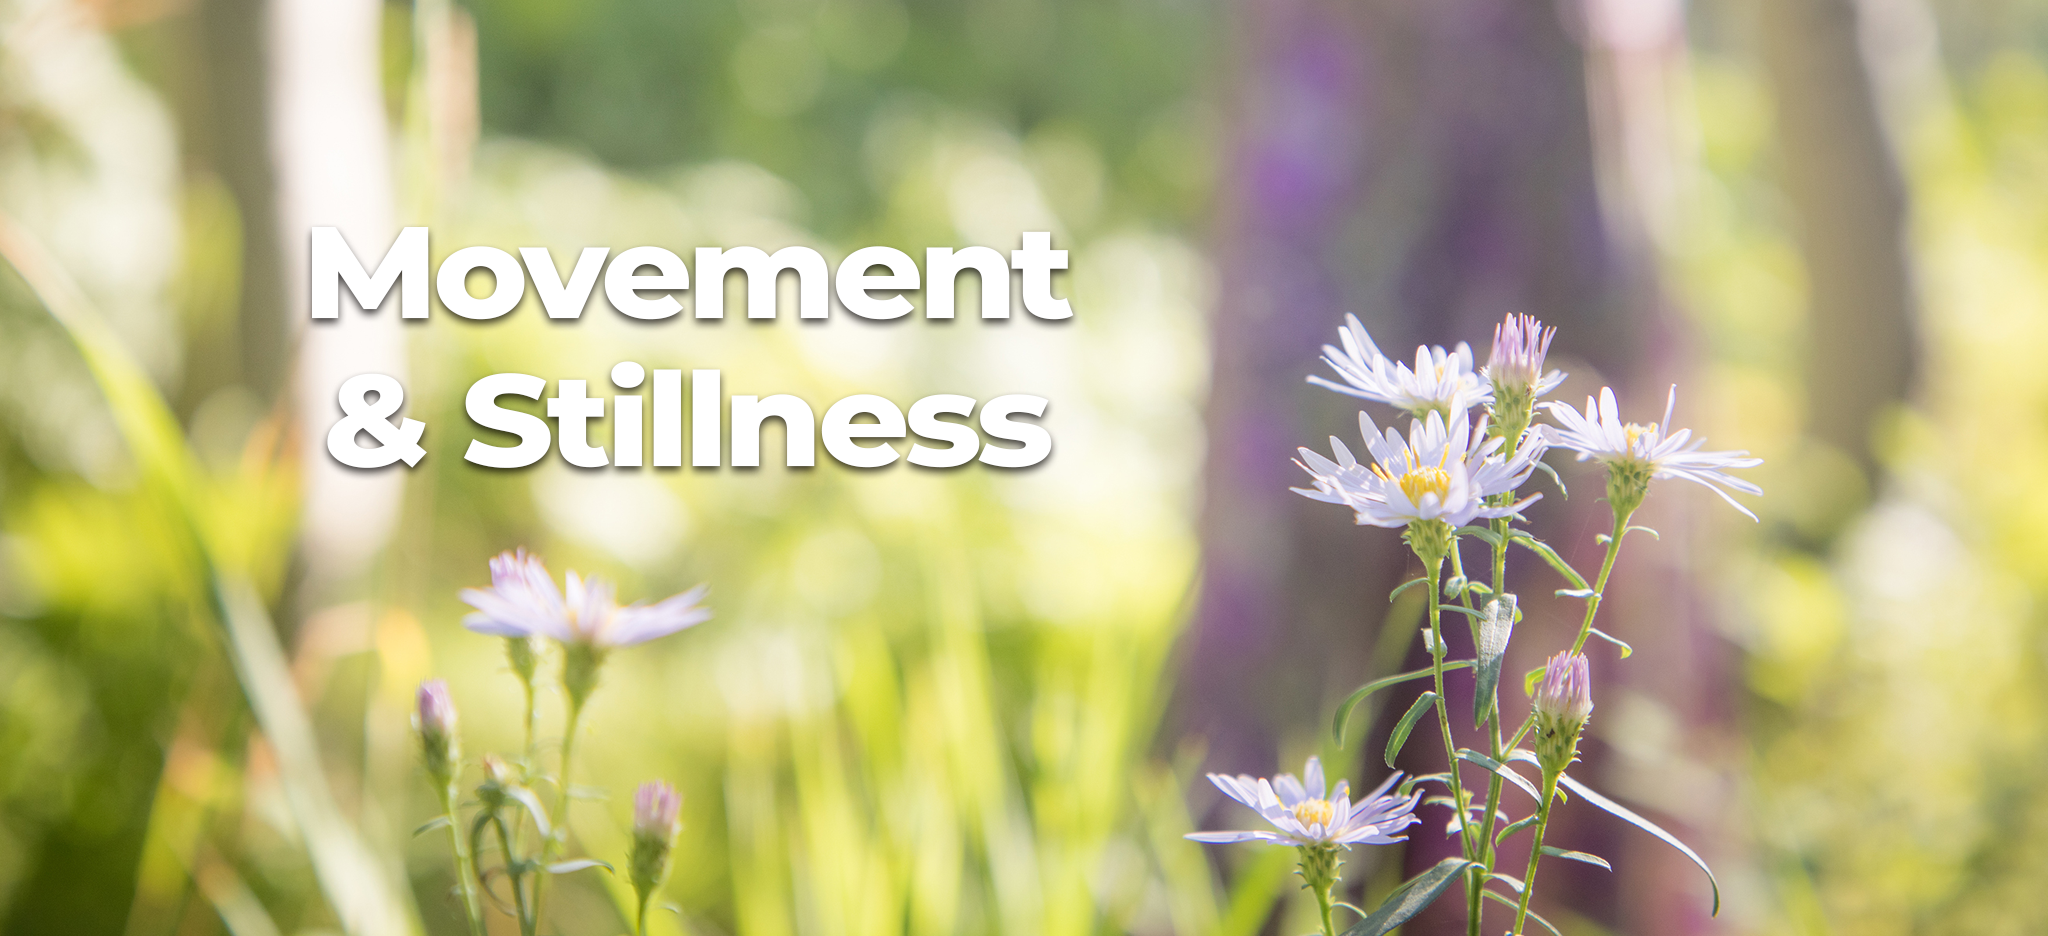 Benefits of Movement and Stillness